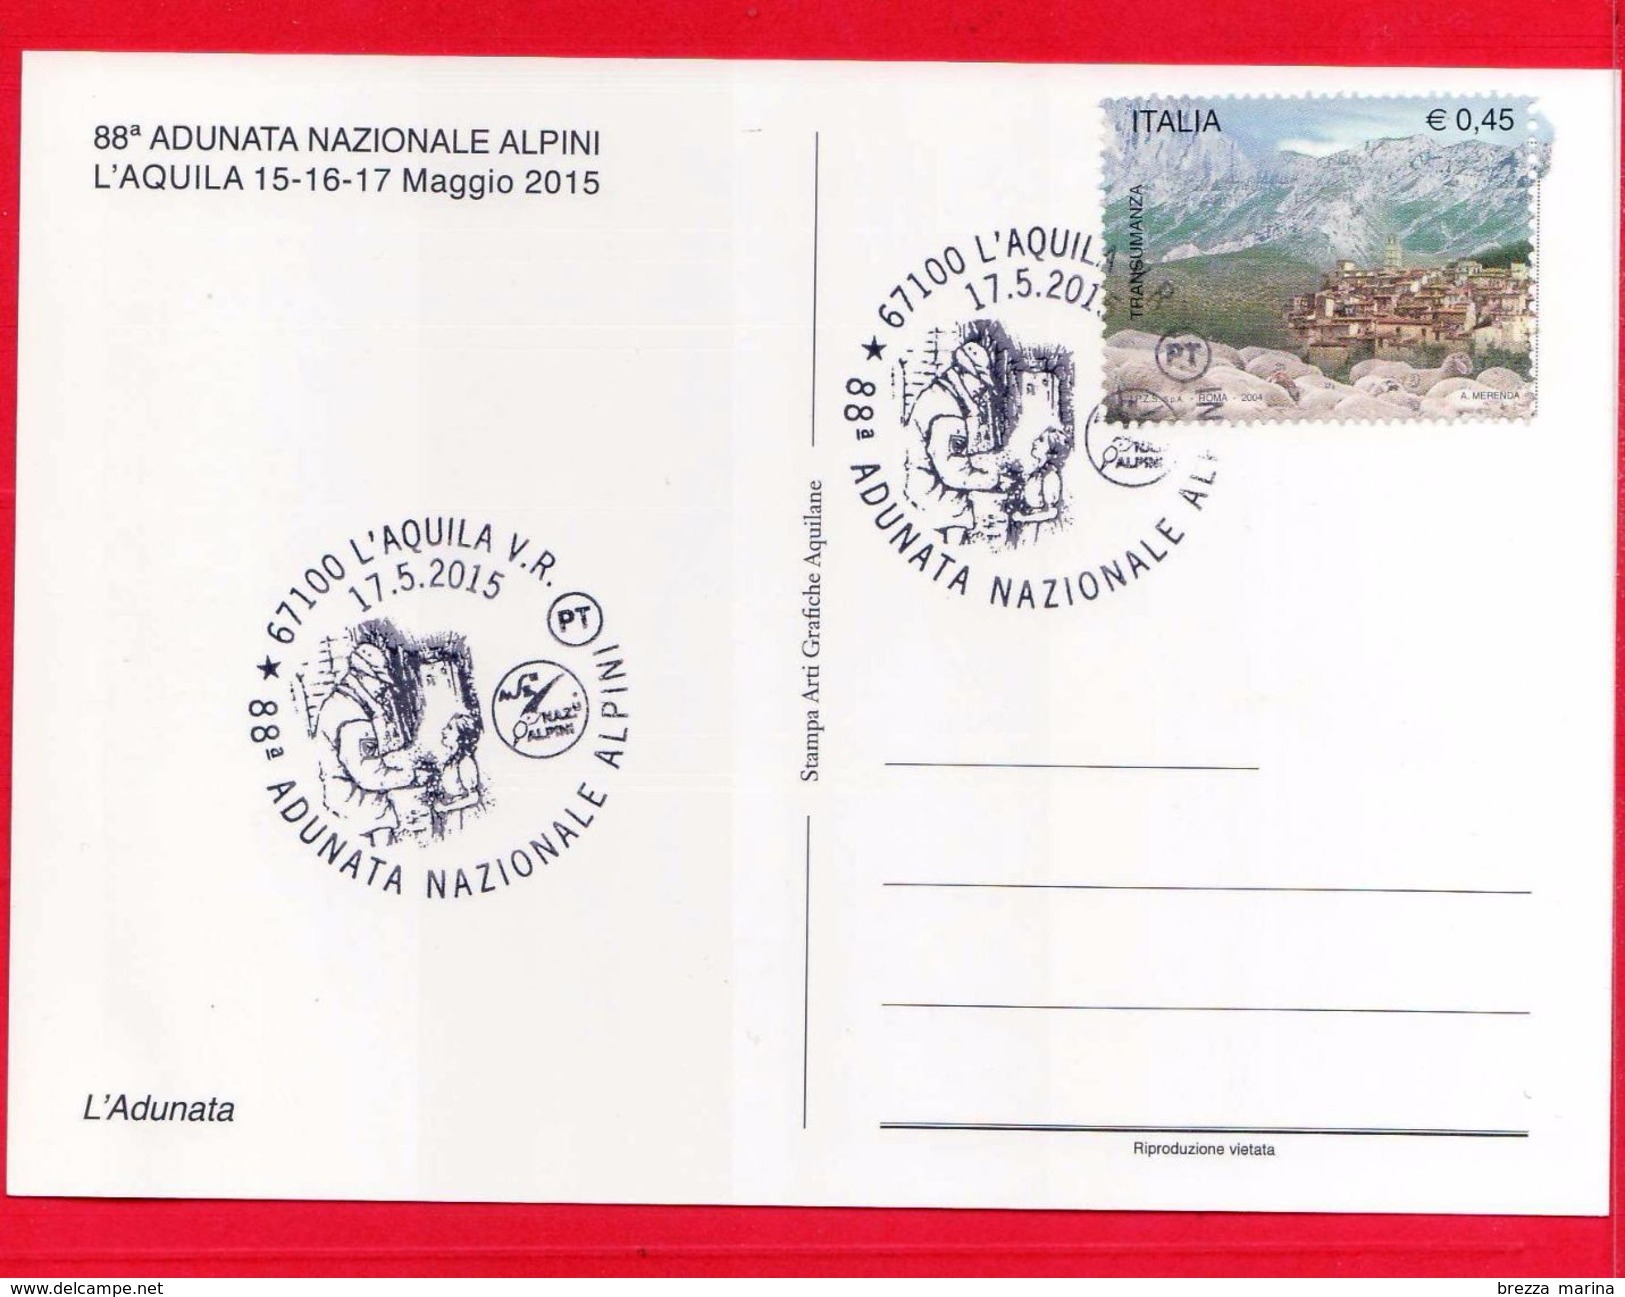 ITALIA - 2015 - Folder - ANA - 88 Adunata nazionale Alpini - L'Aquila - annullo 17-05-2015 - Cartolina - Ciondolo